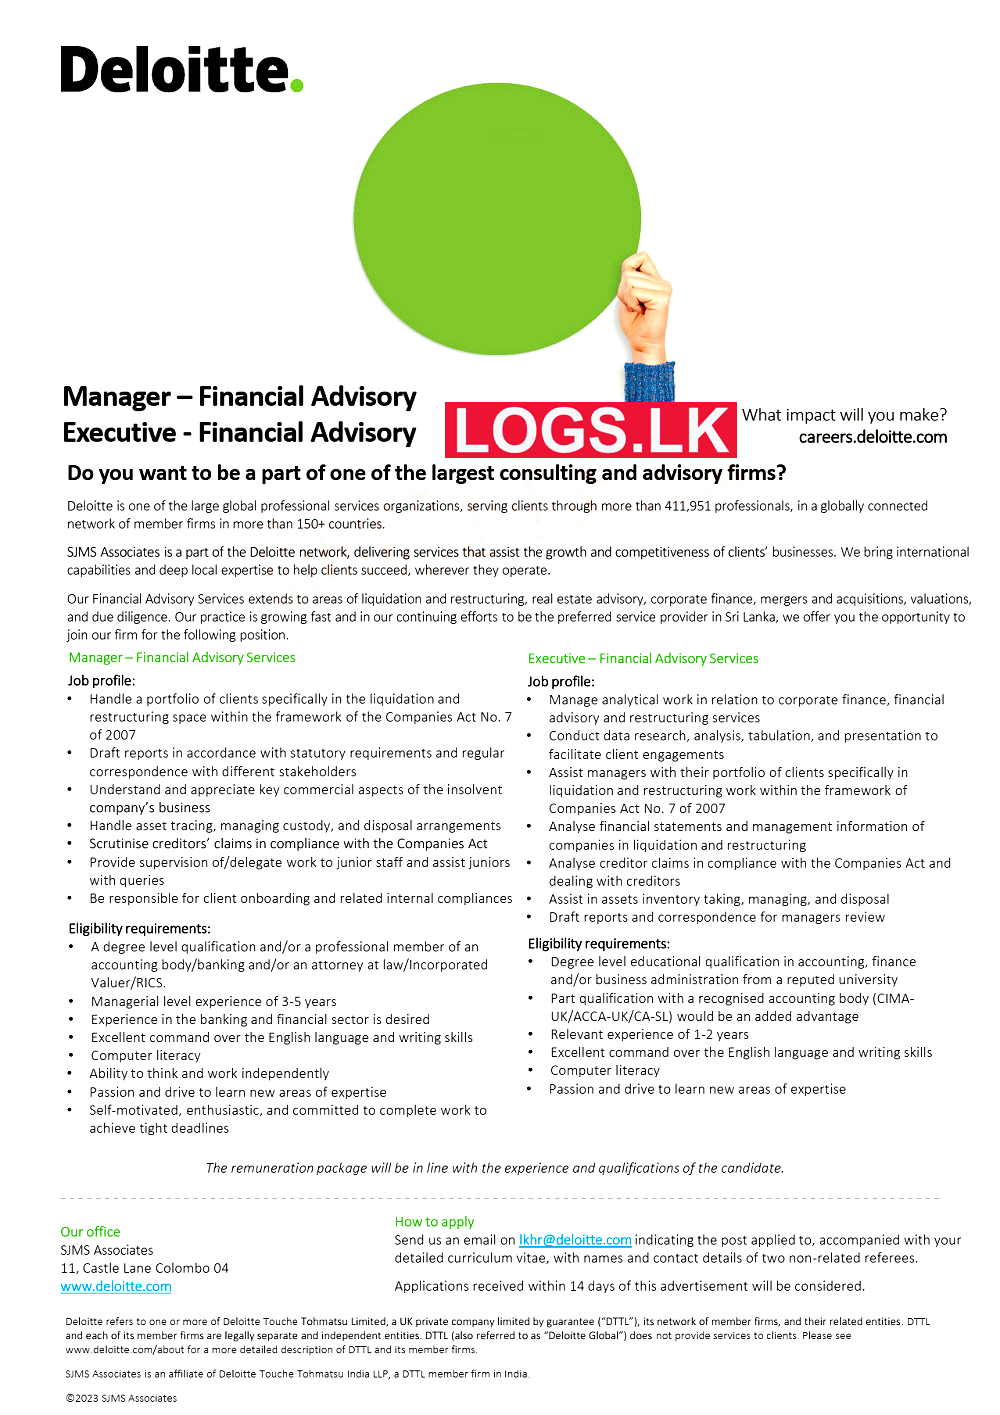 Manager / Executive (Financial Advisory) Jobs at Deloitte Sri Lanka Job Vacancies